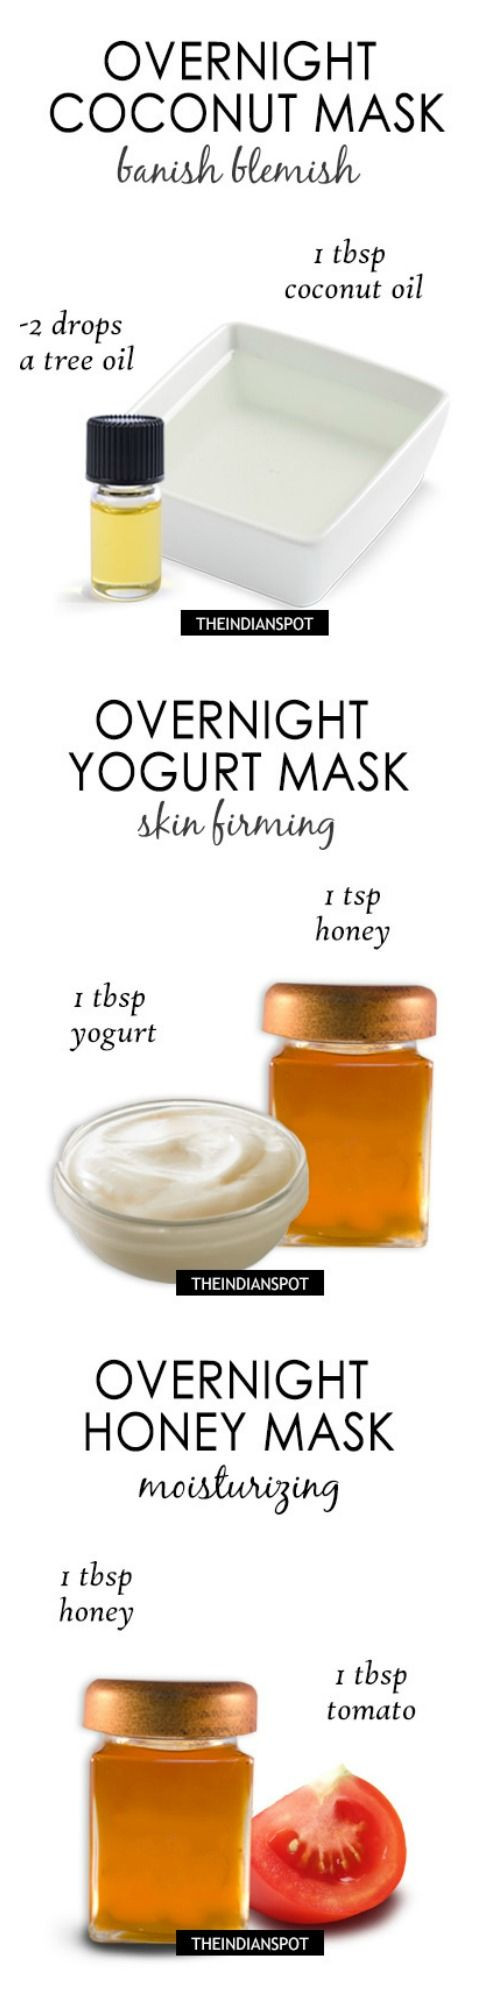 DIY Overnight Face Mask For Acne
 Overnight diy face mask